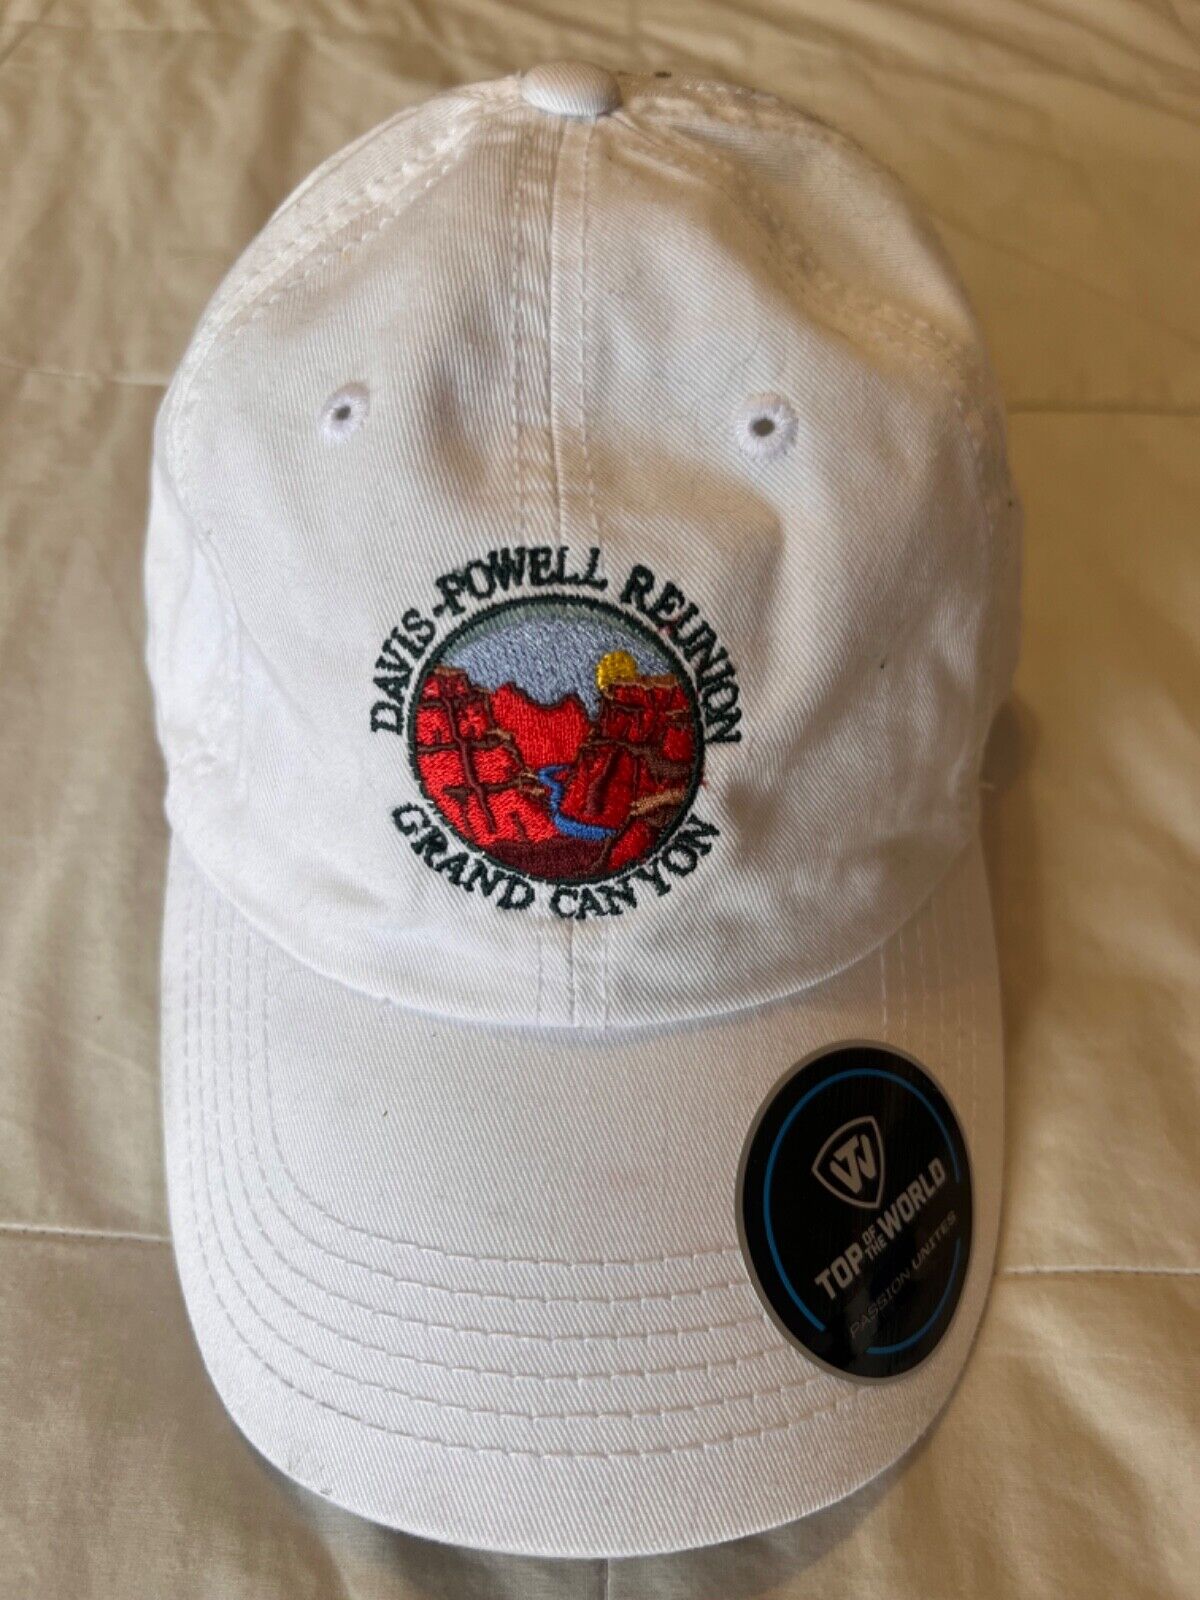 John Wesley Powell Grand Canyon Expedition 1869 - 2019 Baseball Hat Cap New 150